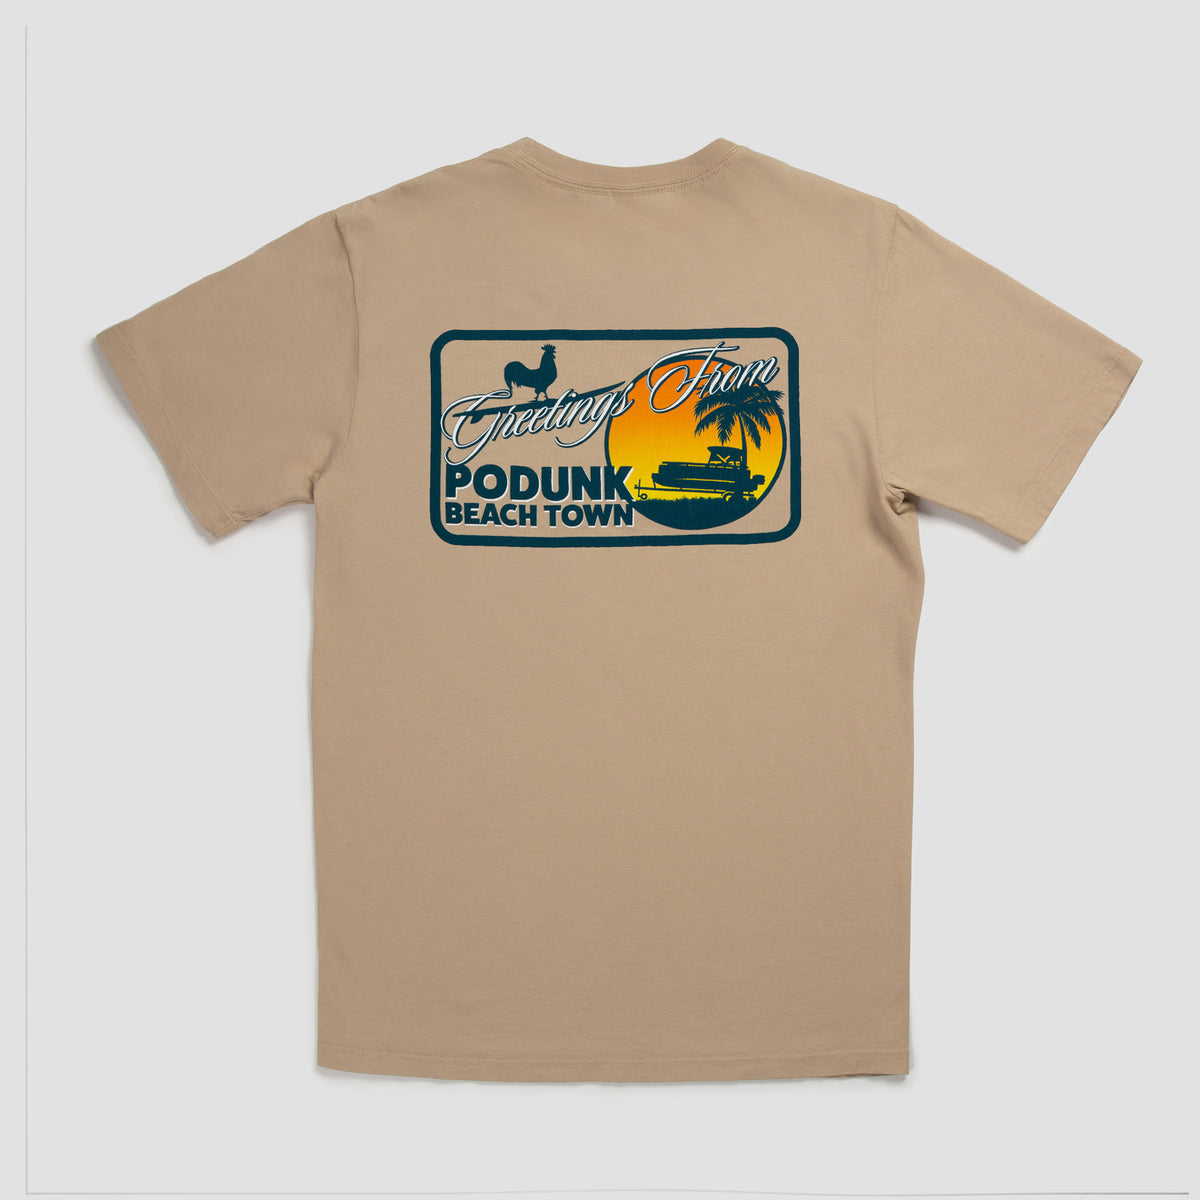 Podunk Beach Town Tee Shirt